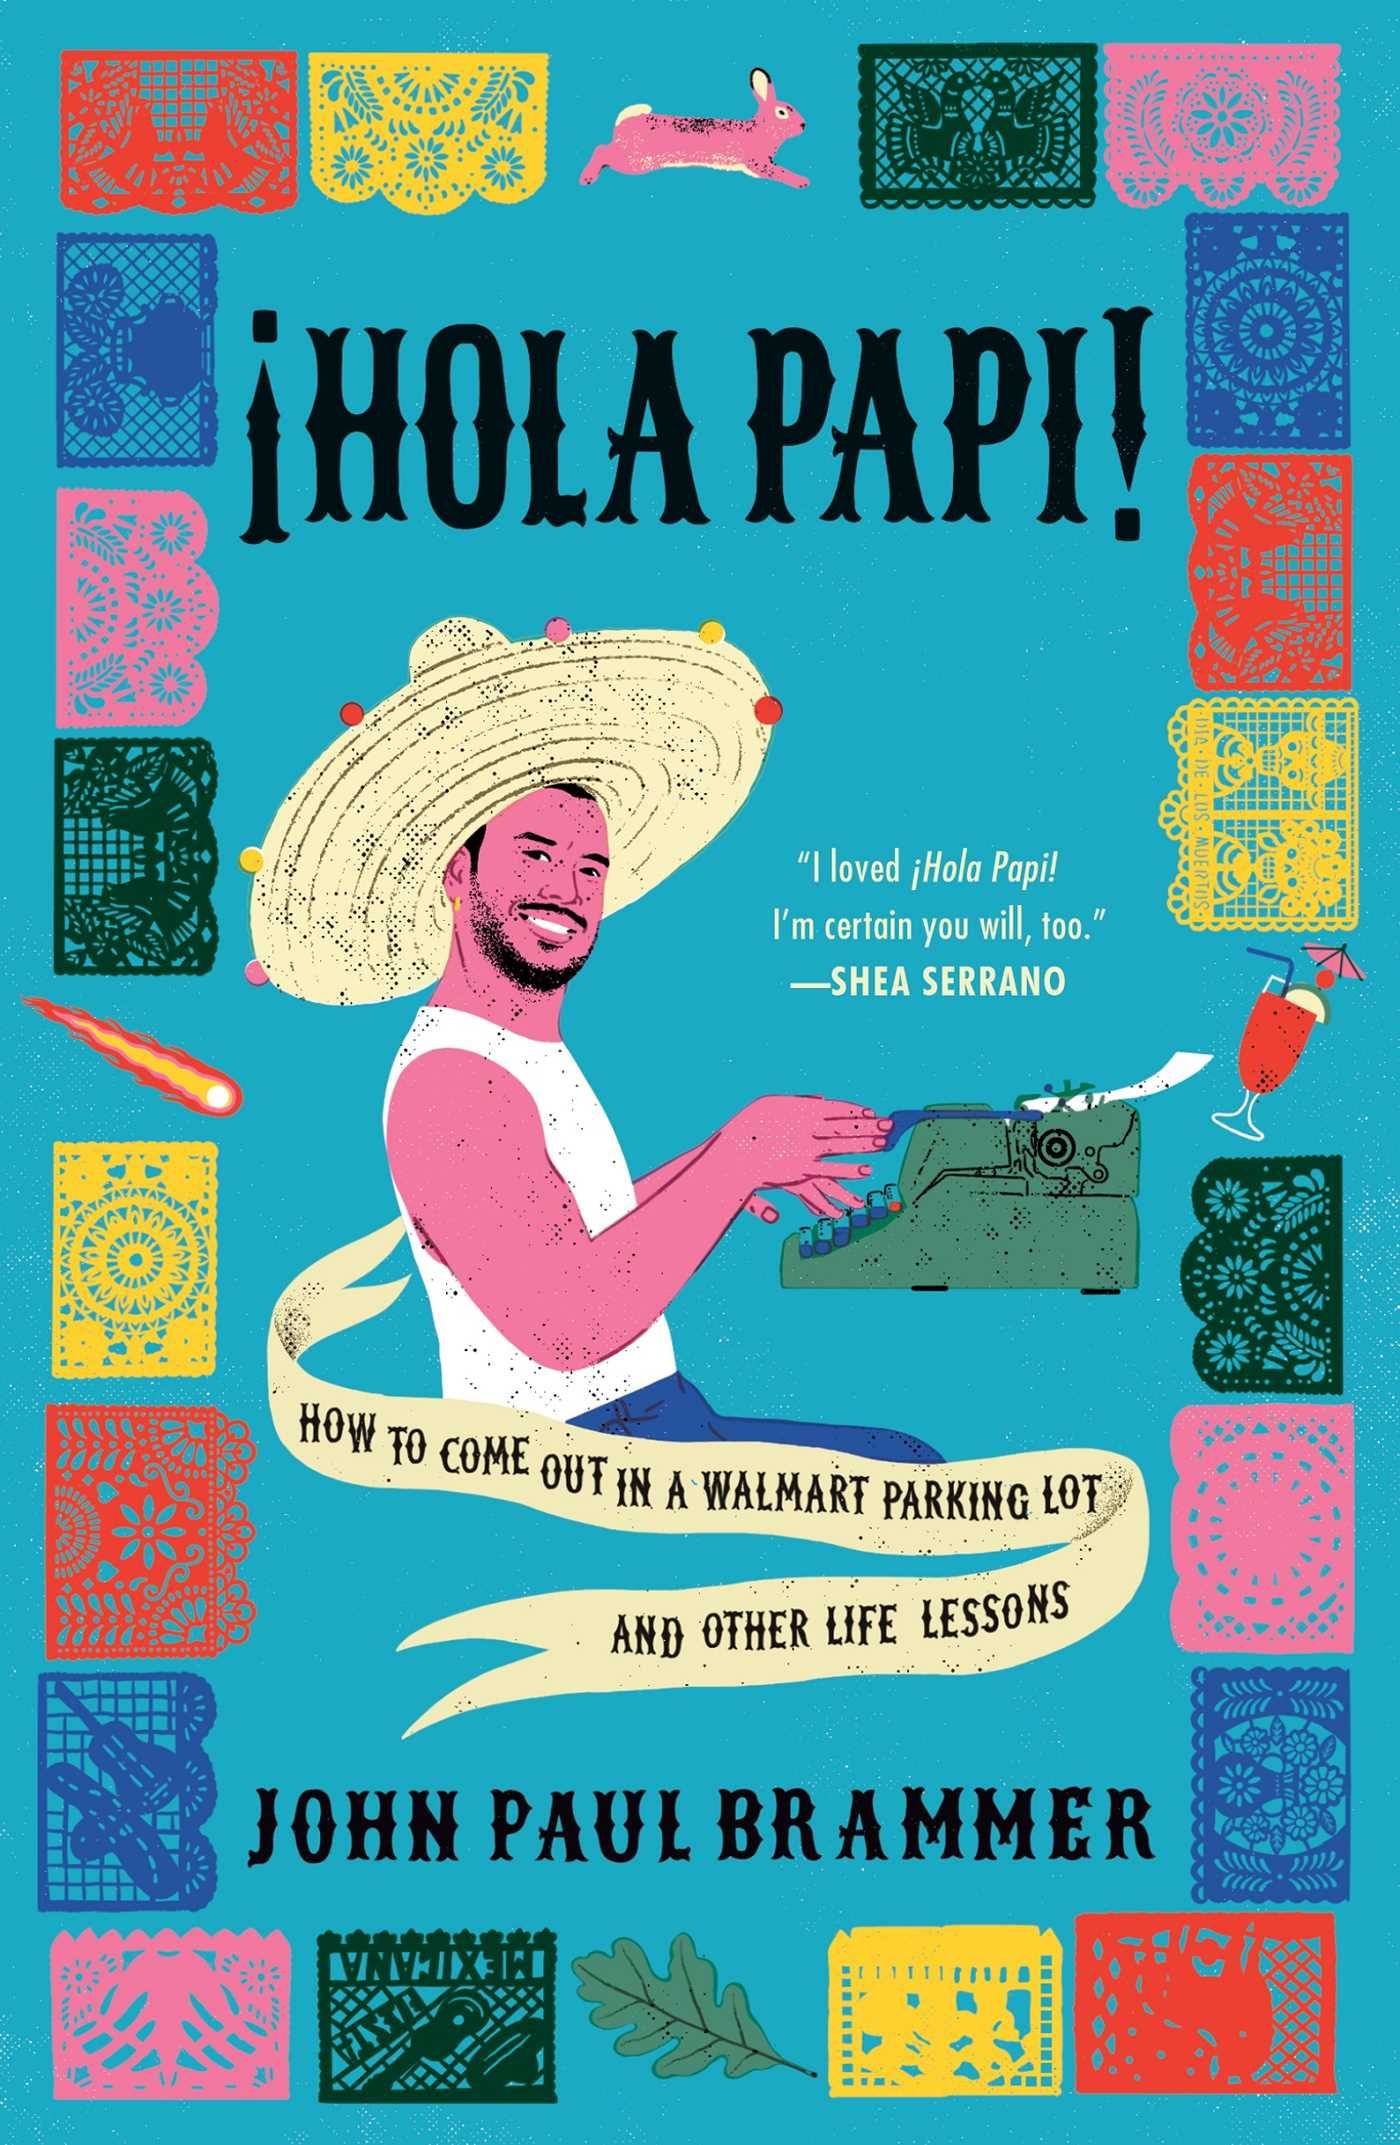 Hola Papi by John Paul Brammer book cover